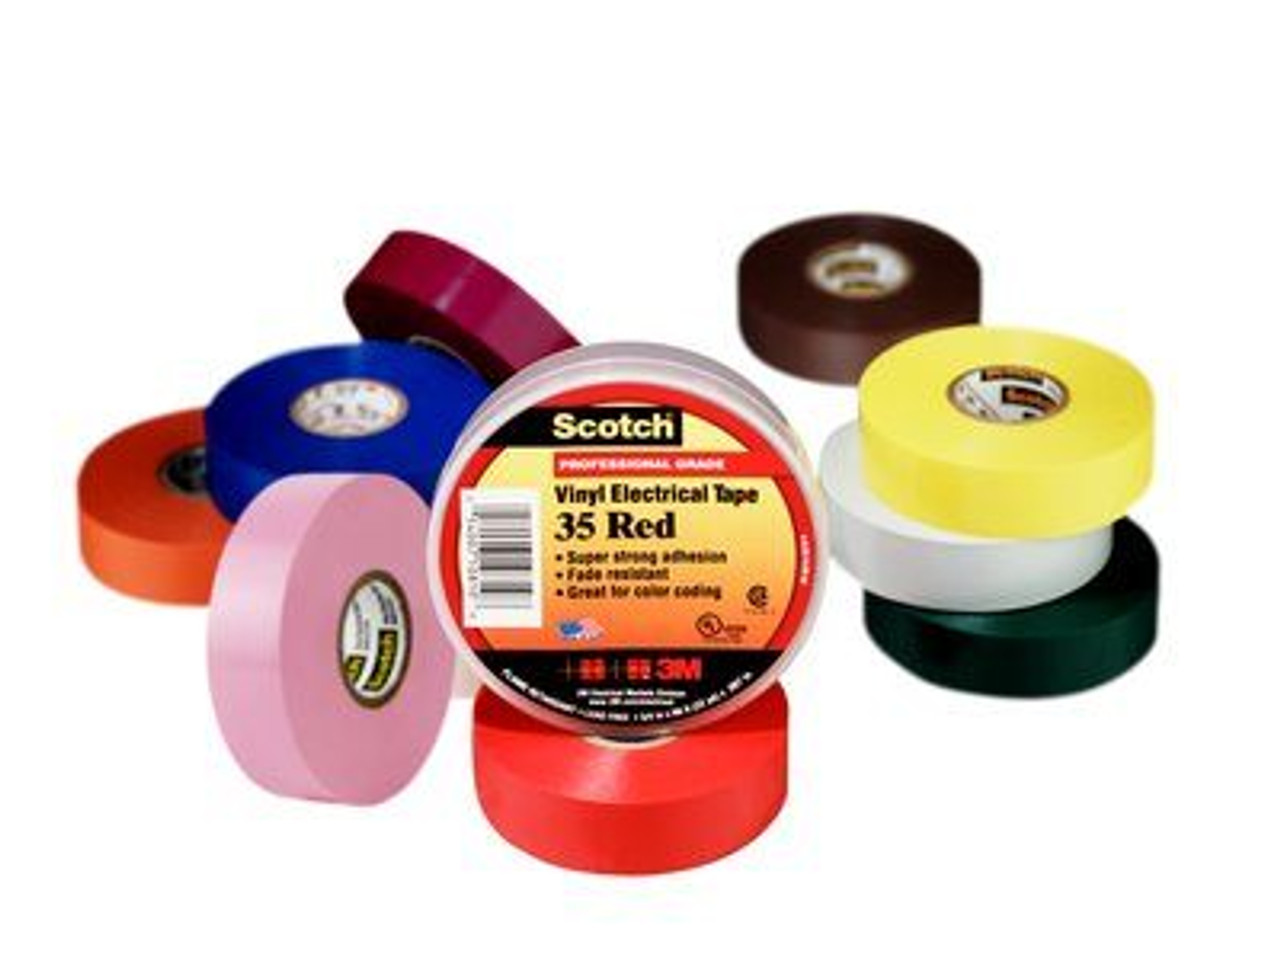 3M Scotch® Vinyl Electrical Color Coding Tape 35-Yellow, 3/4 X 66' - Pkg  Qty 10